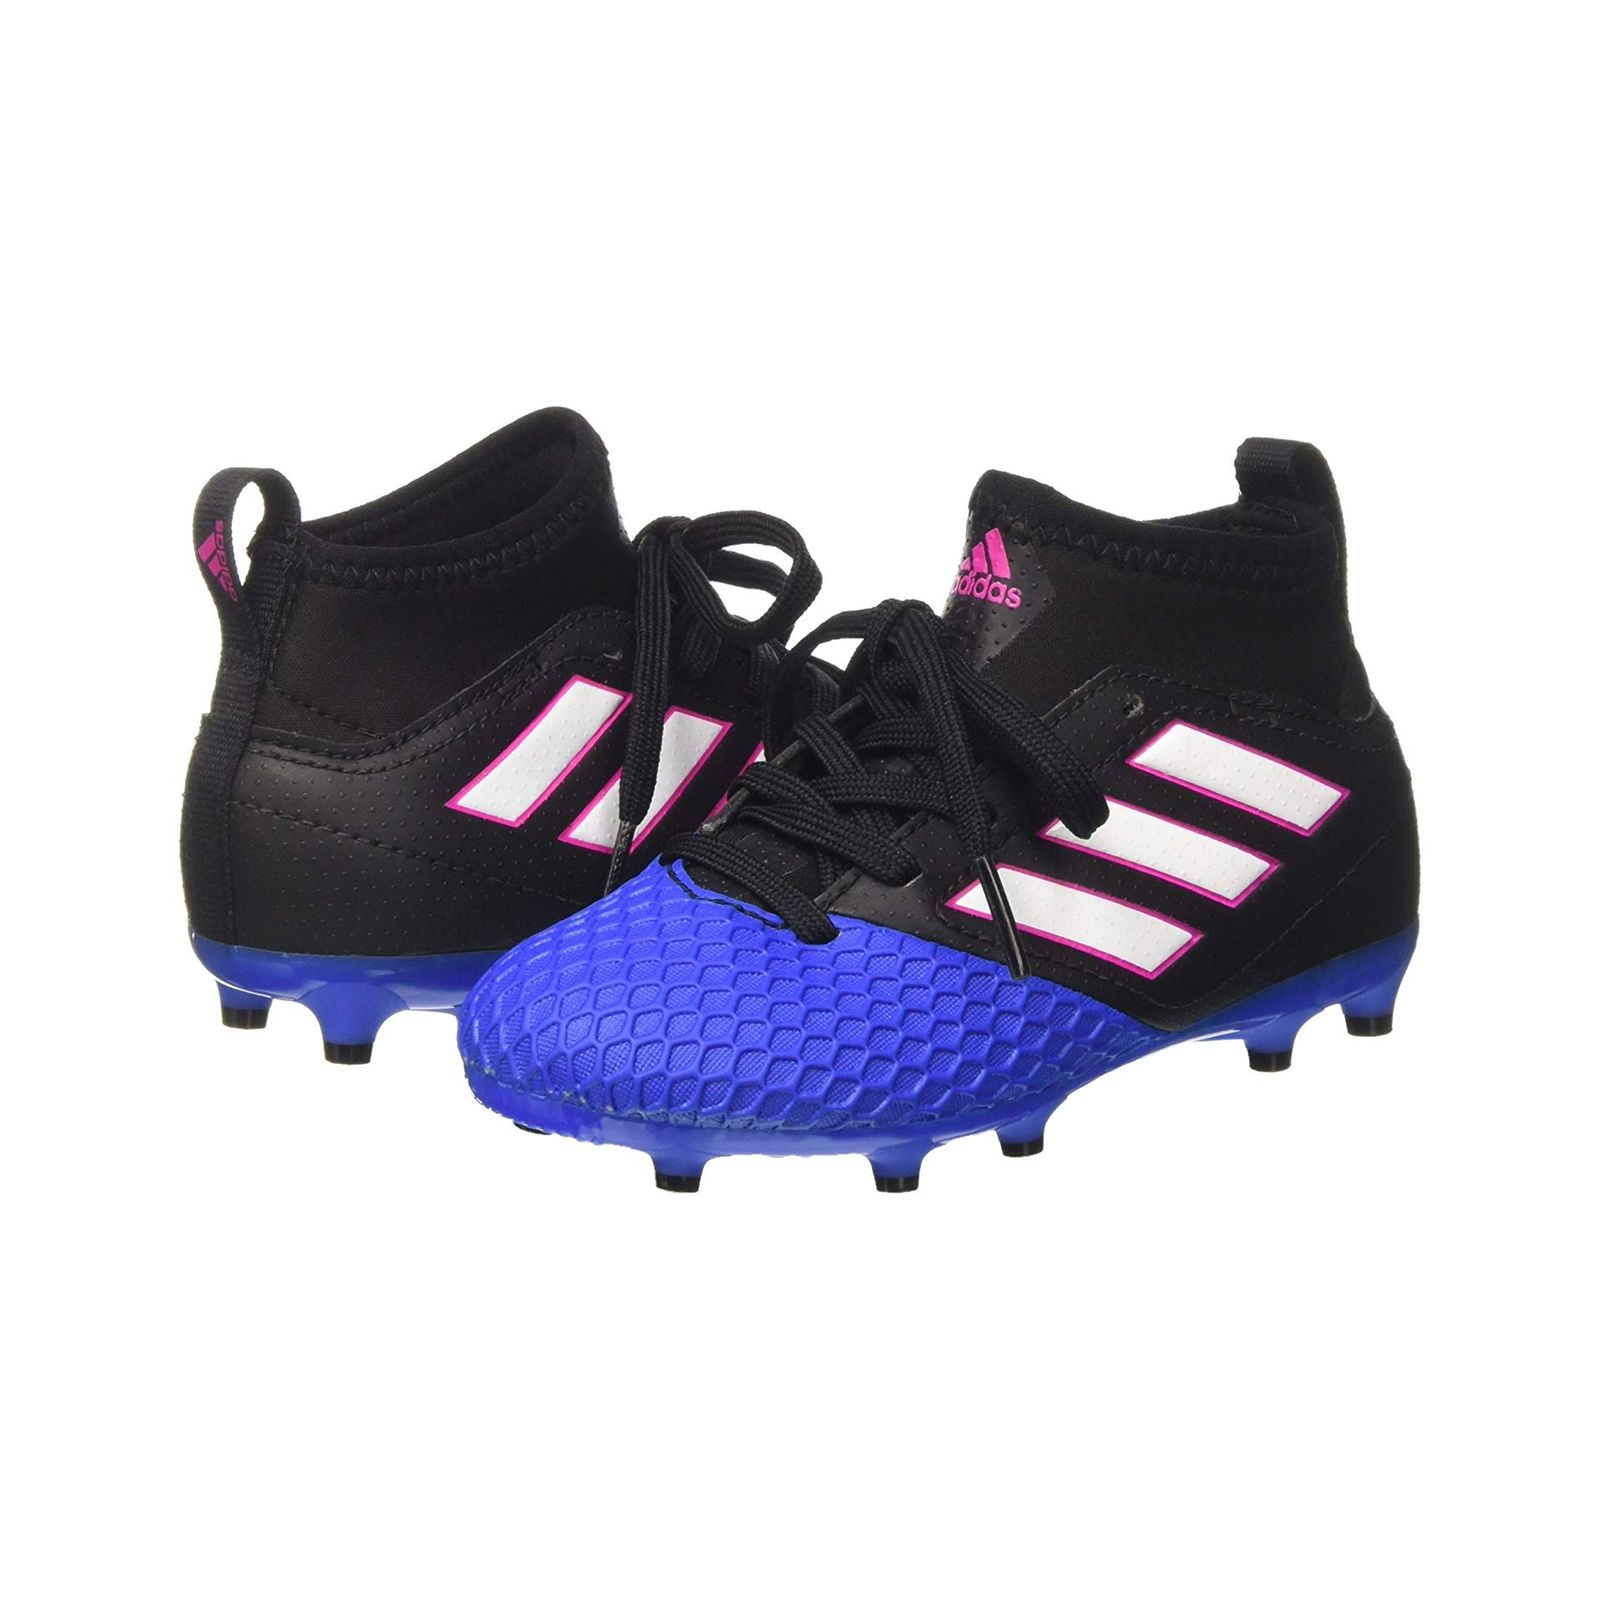 کفش مخصوص فوتبال پسرانه آدیداس سری Ace 17.3 Fg Jr مدل BA9234 -  - 5